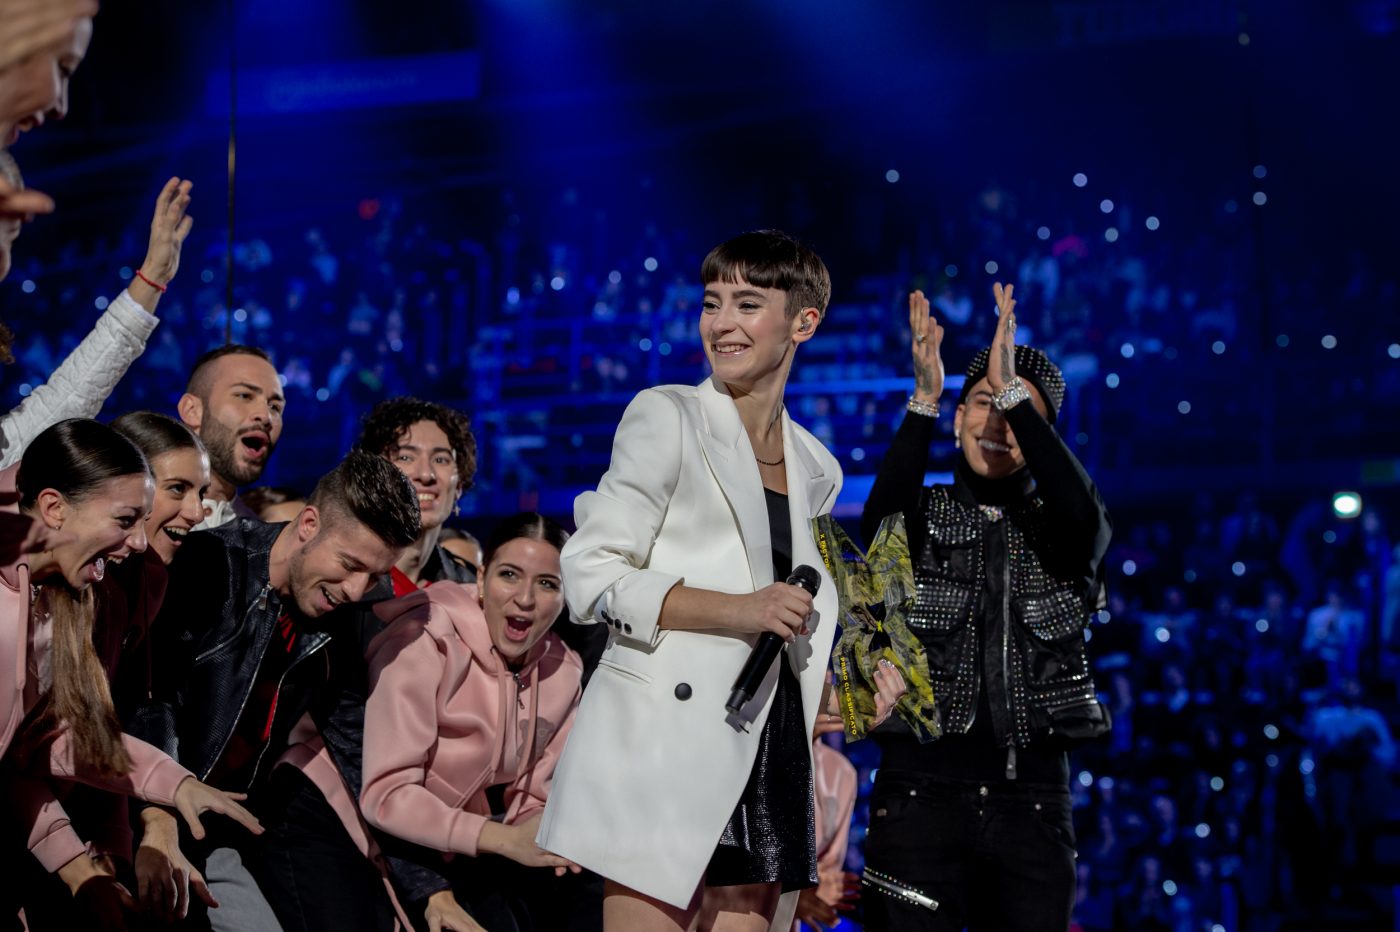 X Factor 2019, spunta tweet scandaloso durante la puntata: la risposta diventa virale